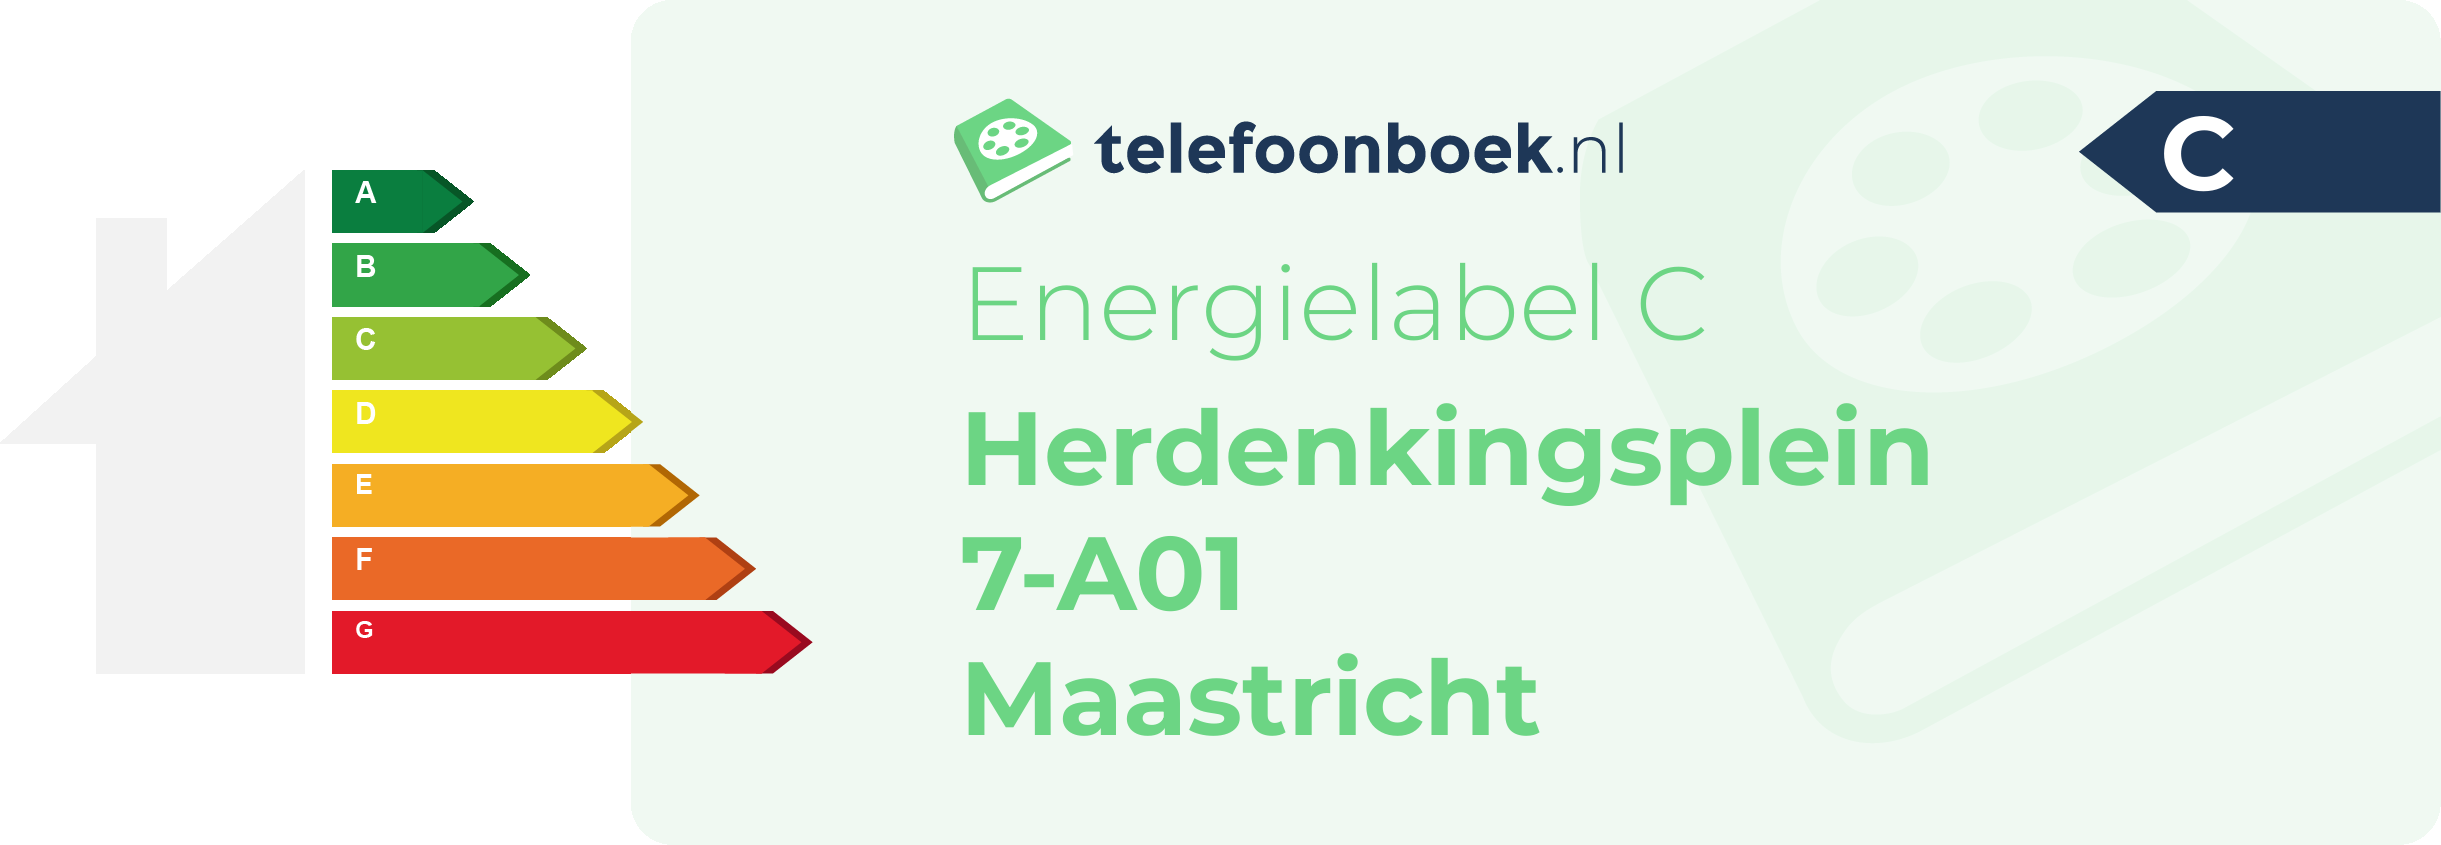 Energielabel Herdenkingsplein 7-A01 Maastricht